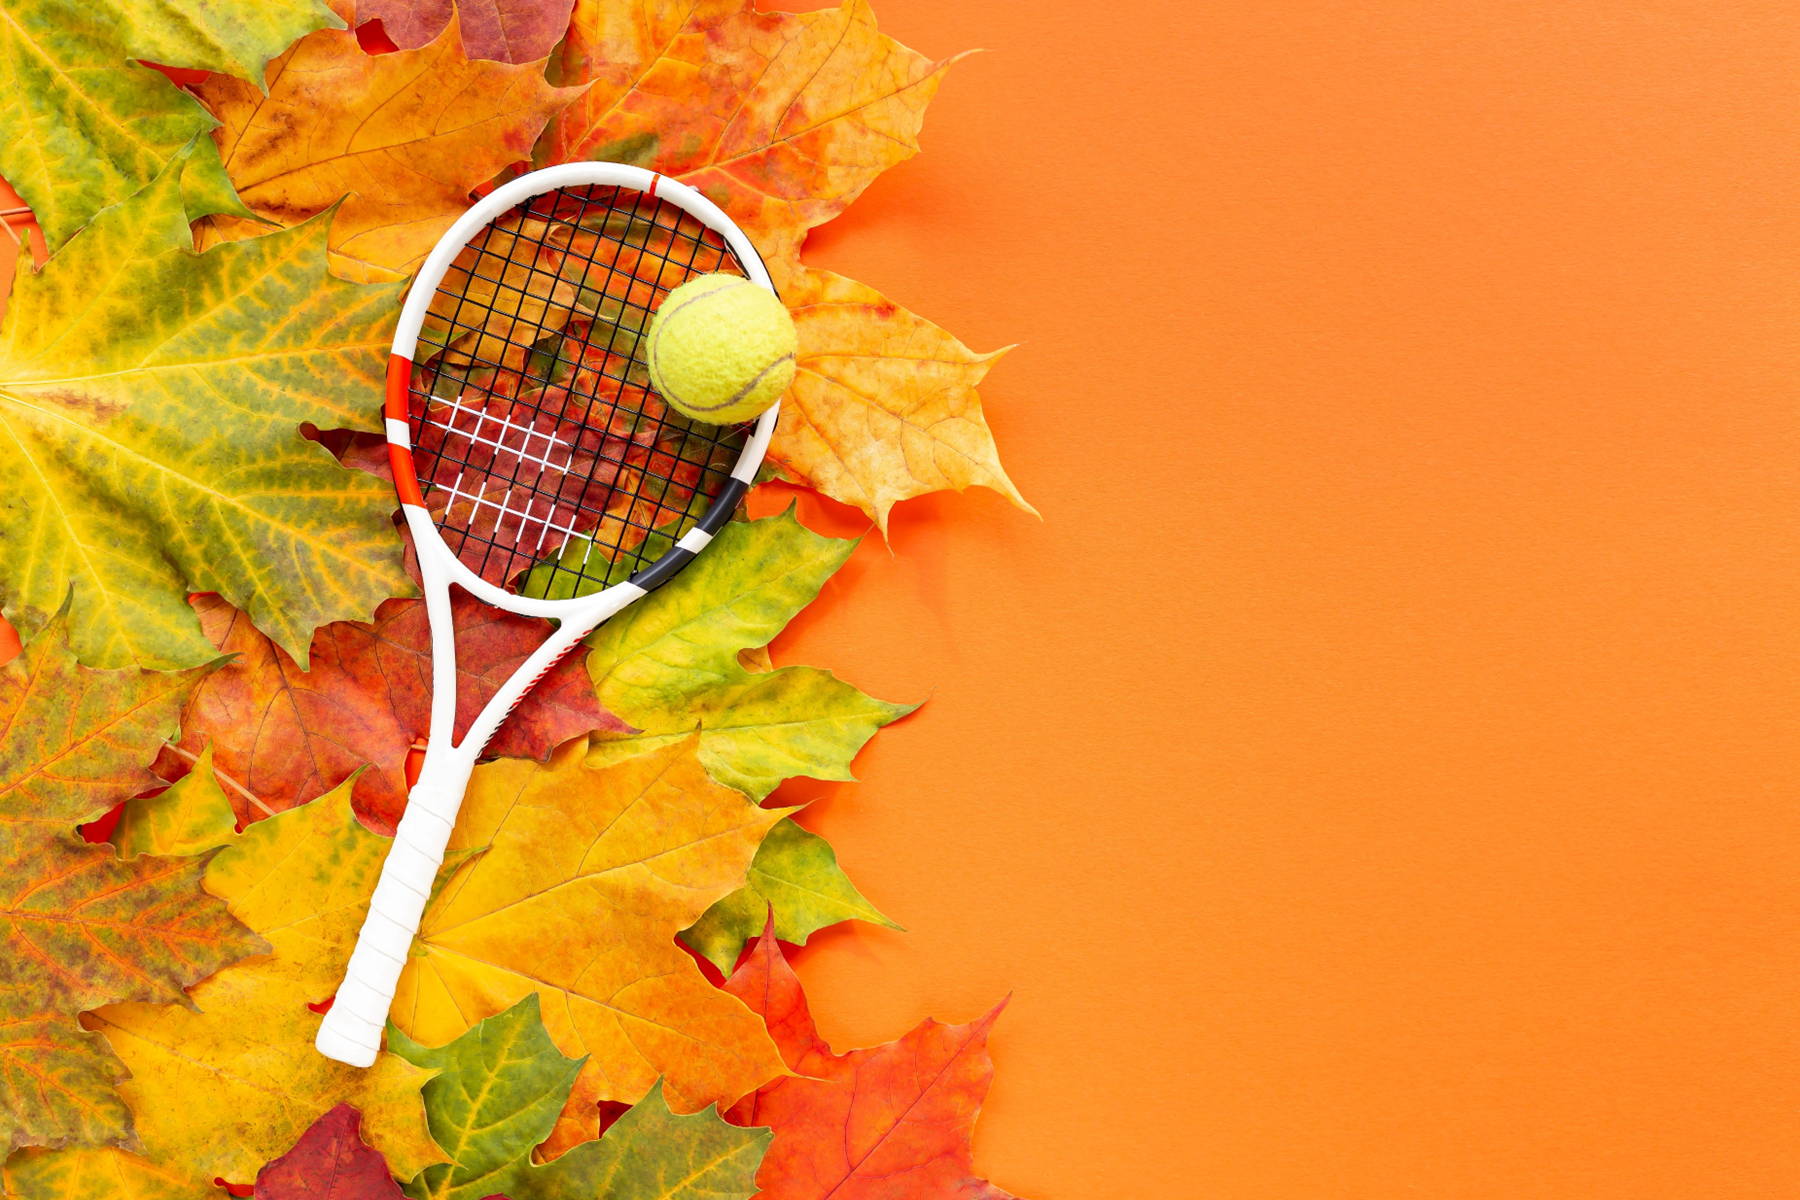 Fall Tennis Clearance Sale